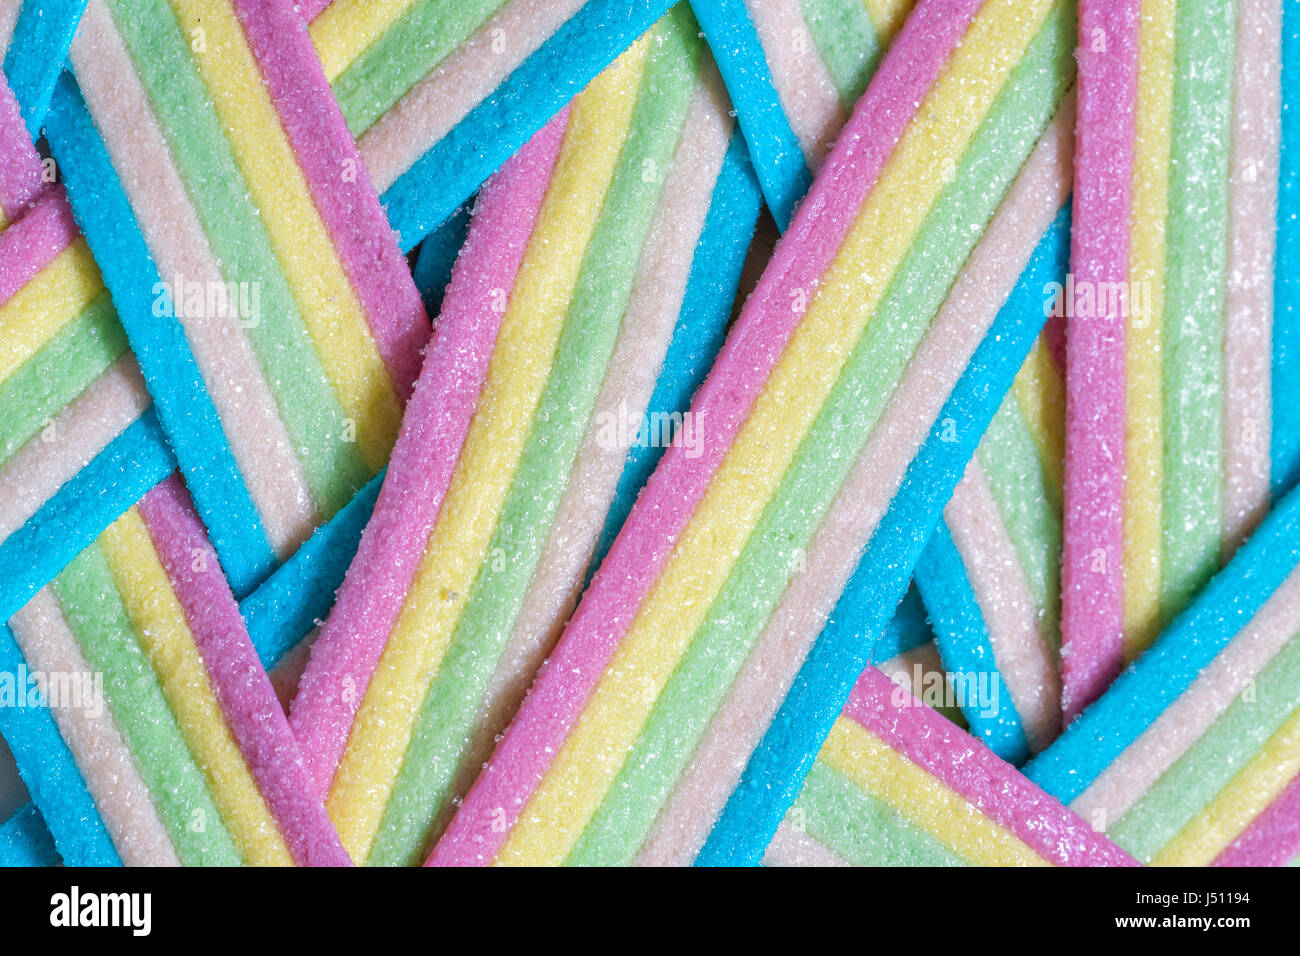 Unicorn Rainbow candy stripes Stock Photo